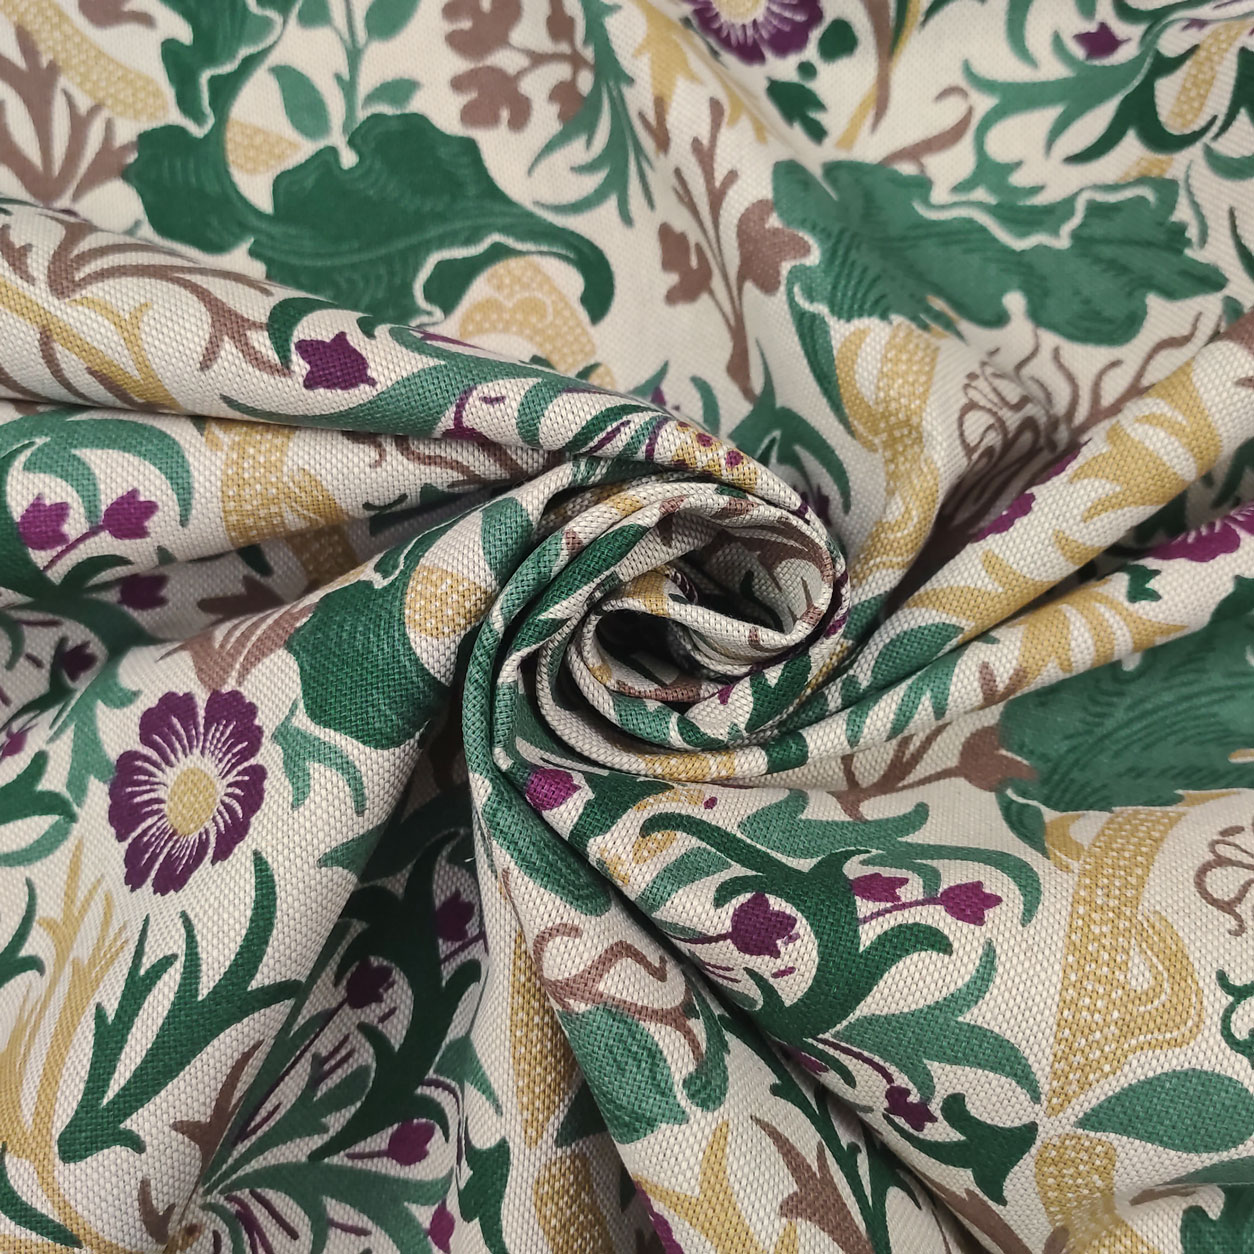 Tessuto misto cotone panama fiori viola foglie (1)